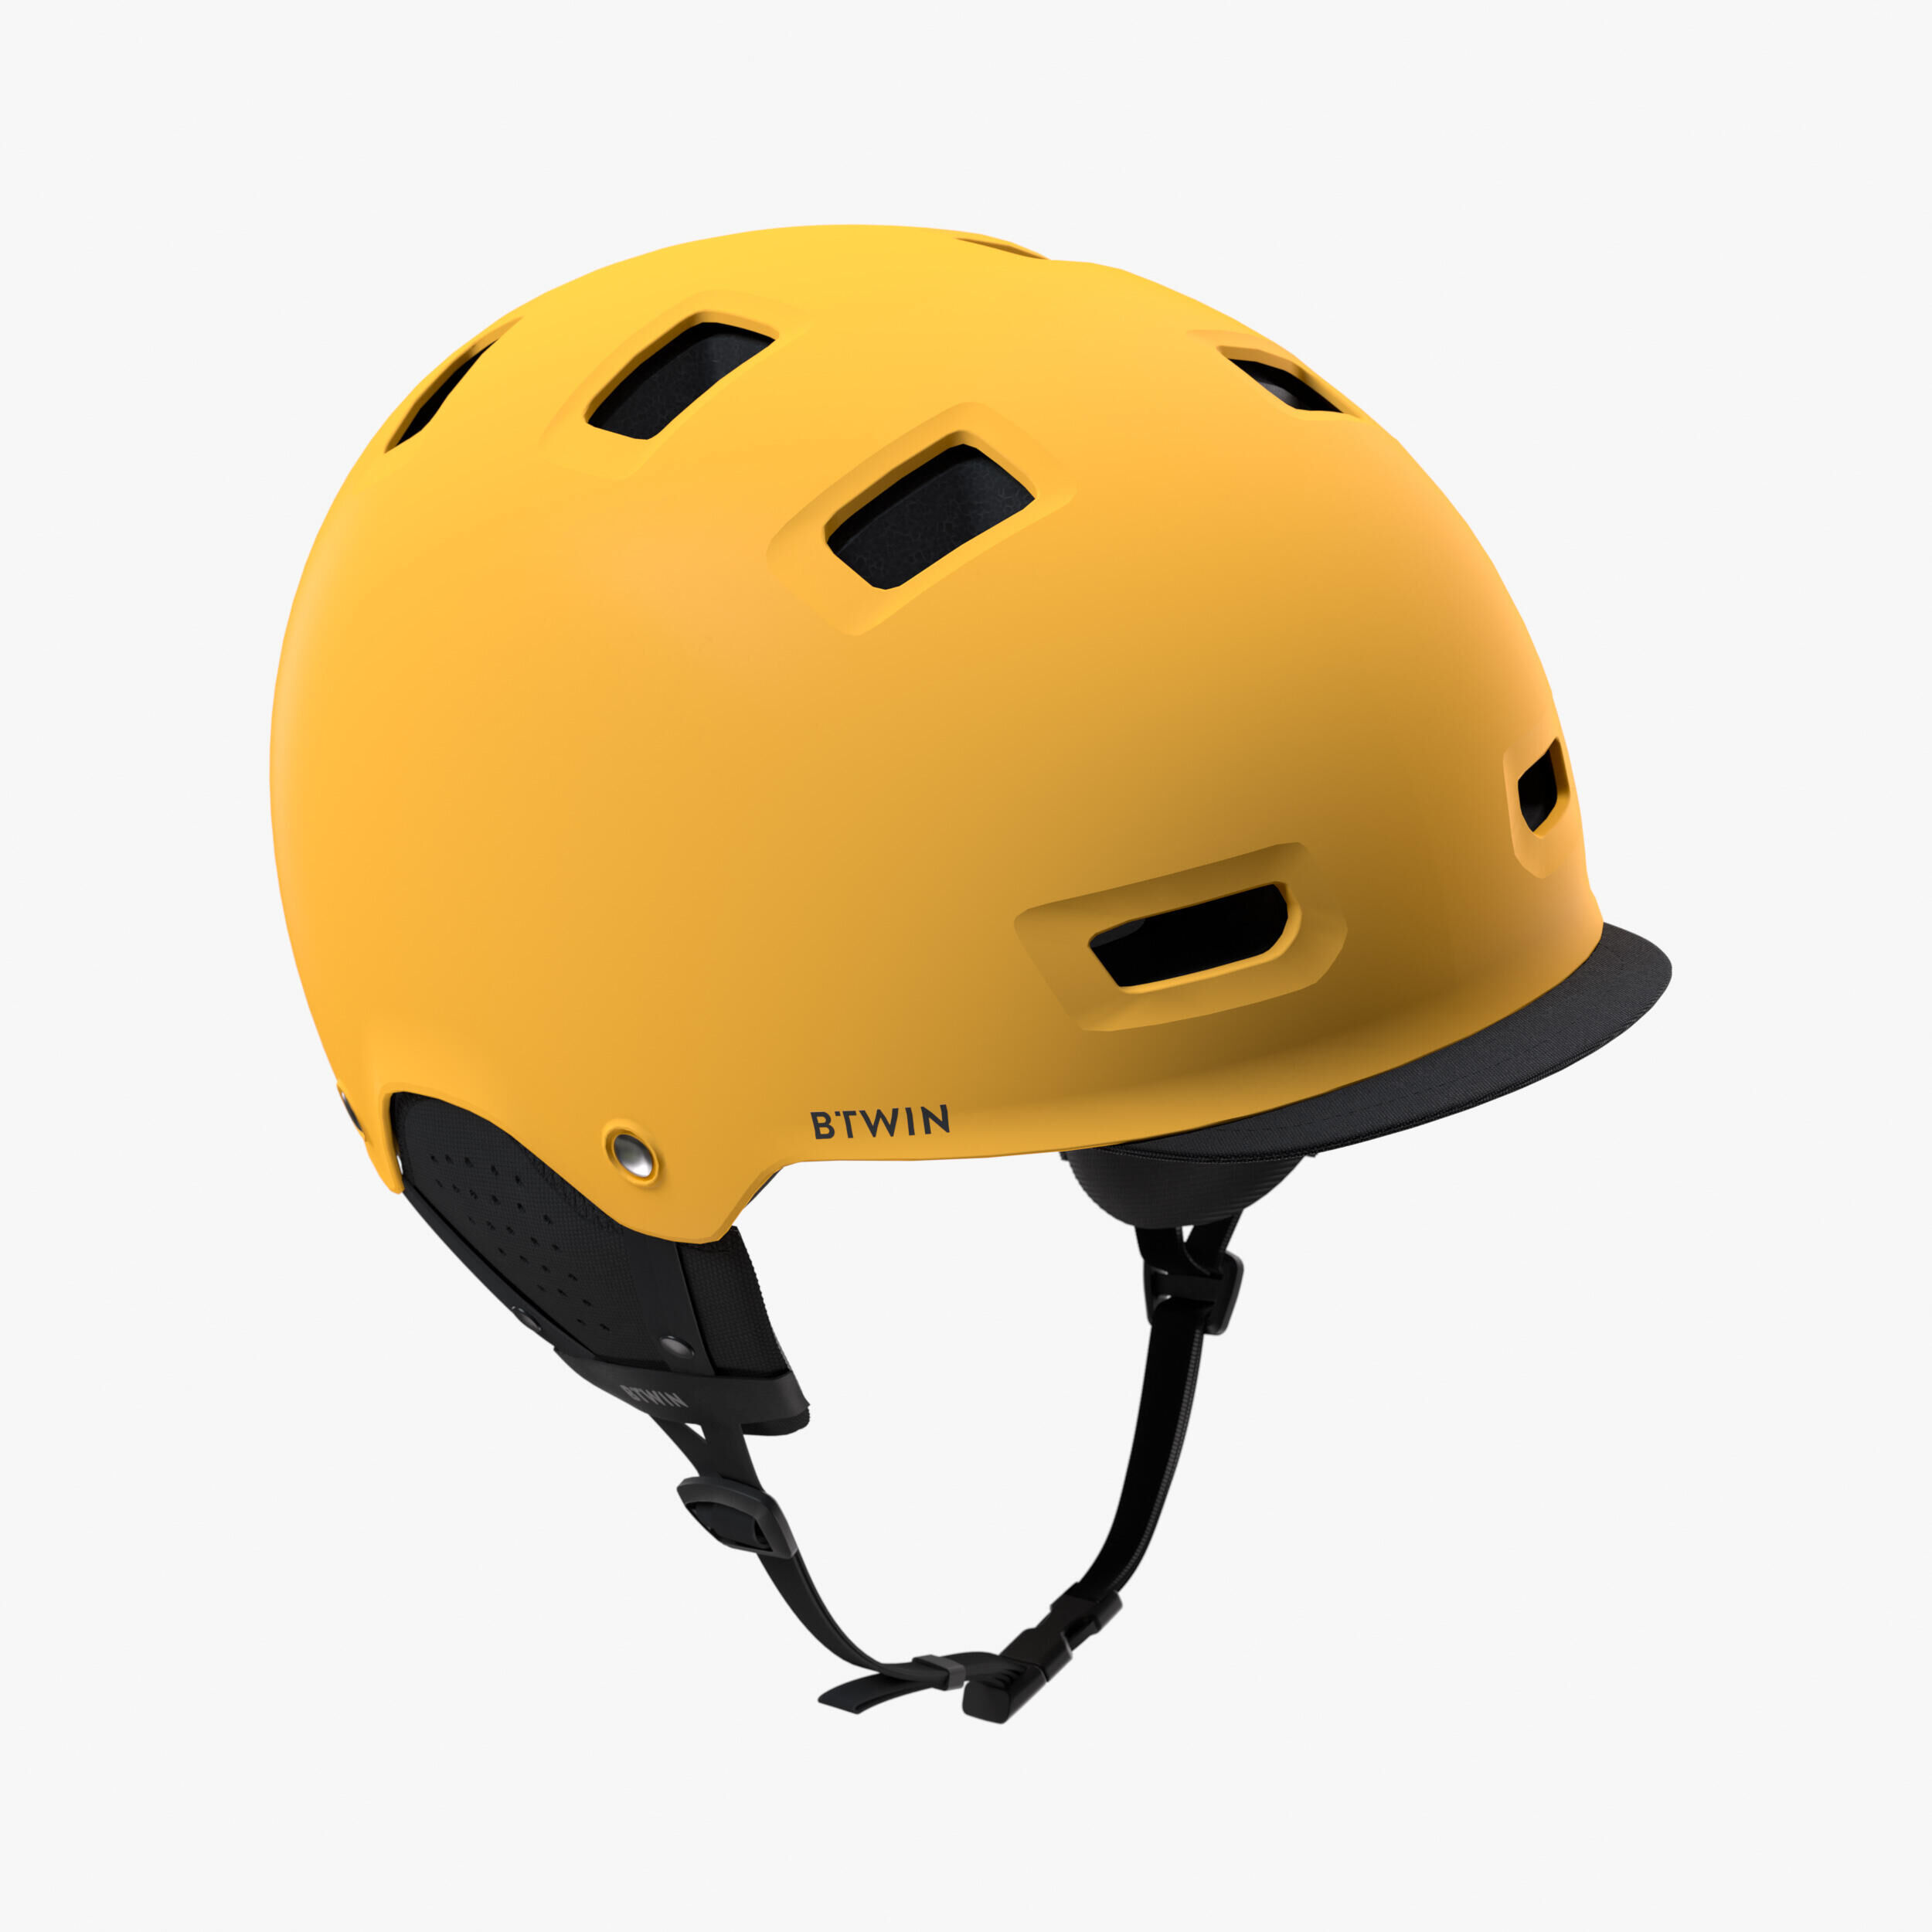 BTWIN City Cycling Bowl Helmet - Yellow